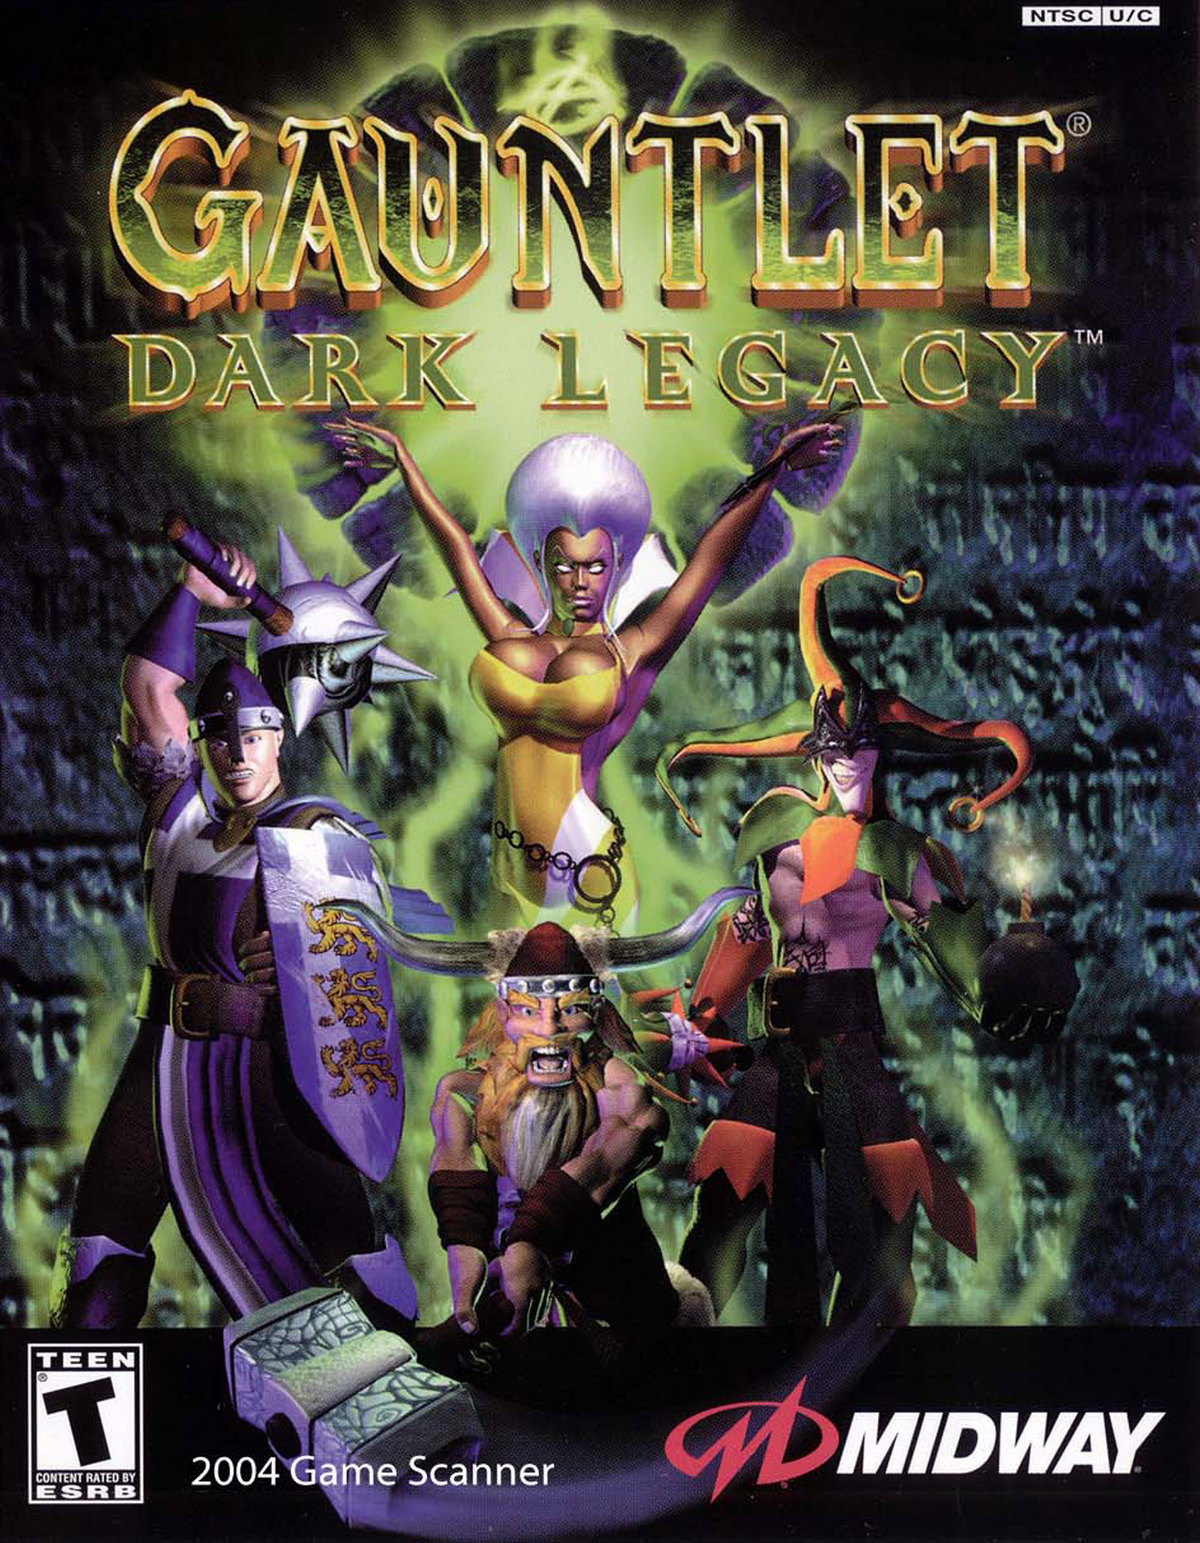 Gauntlet Dark Legacy - Wikipedia